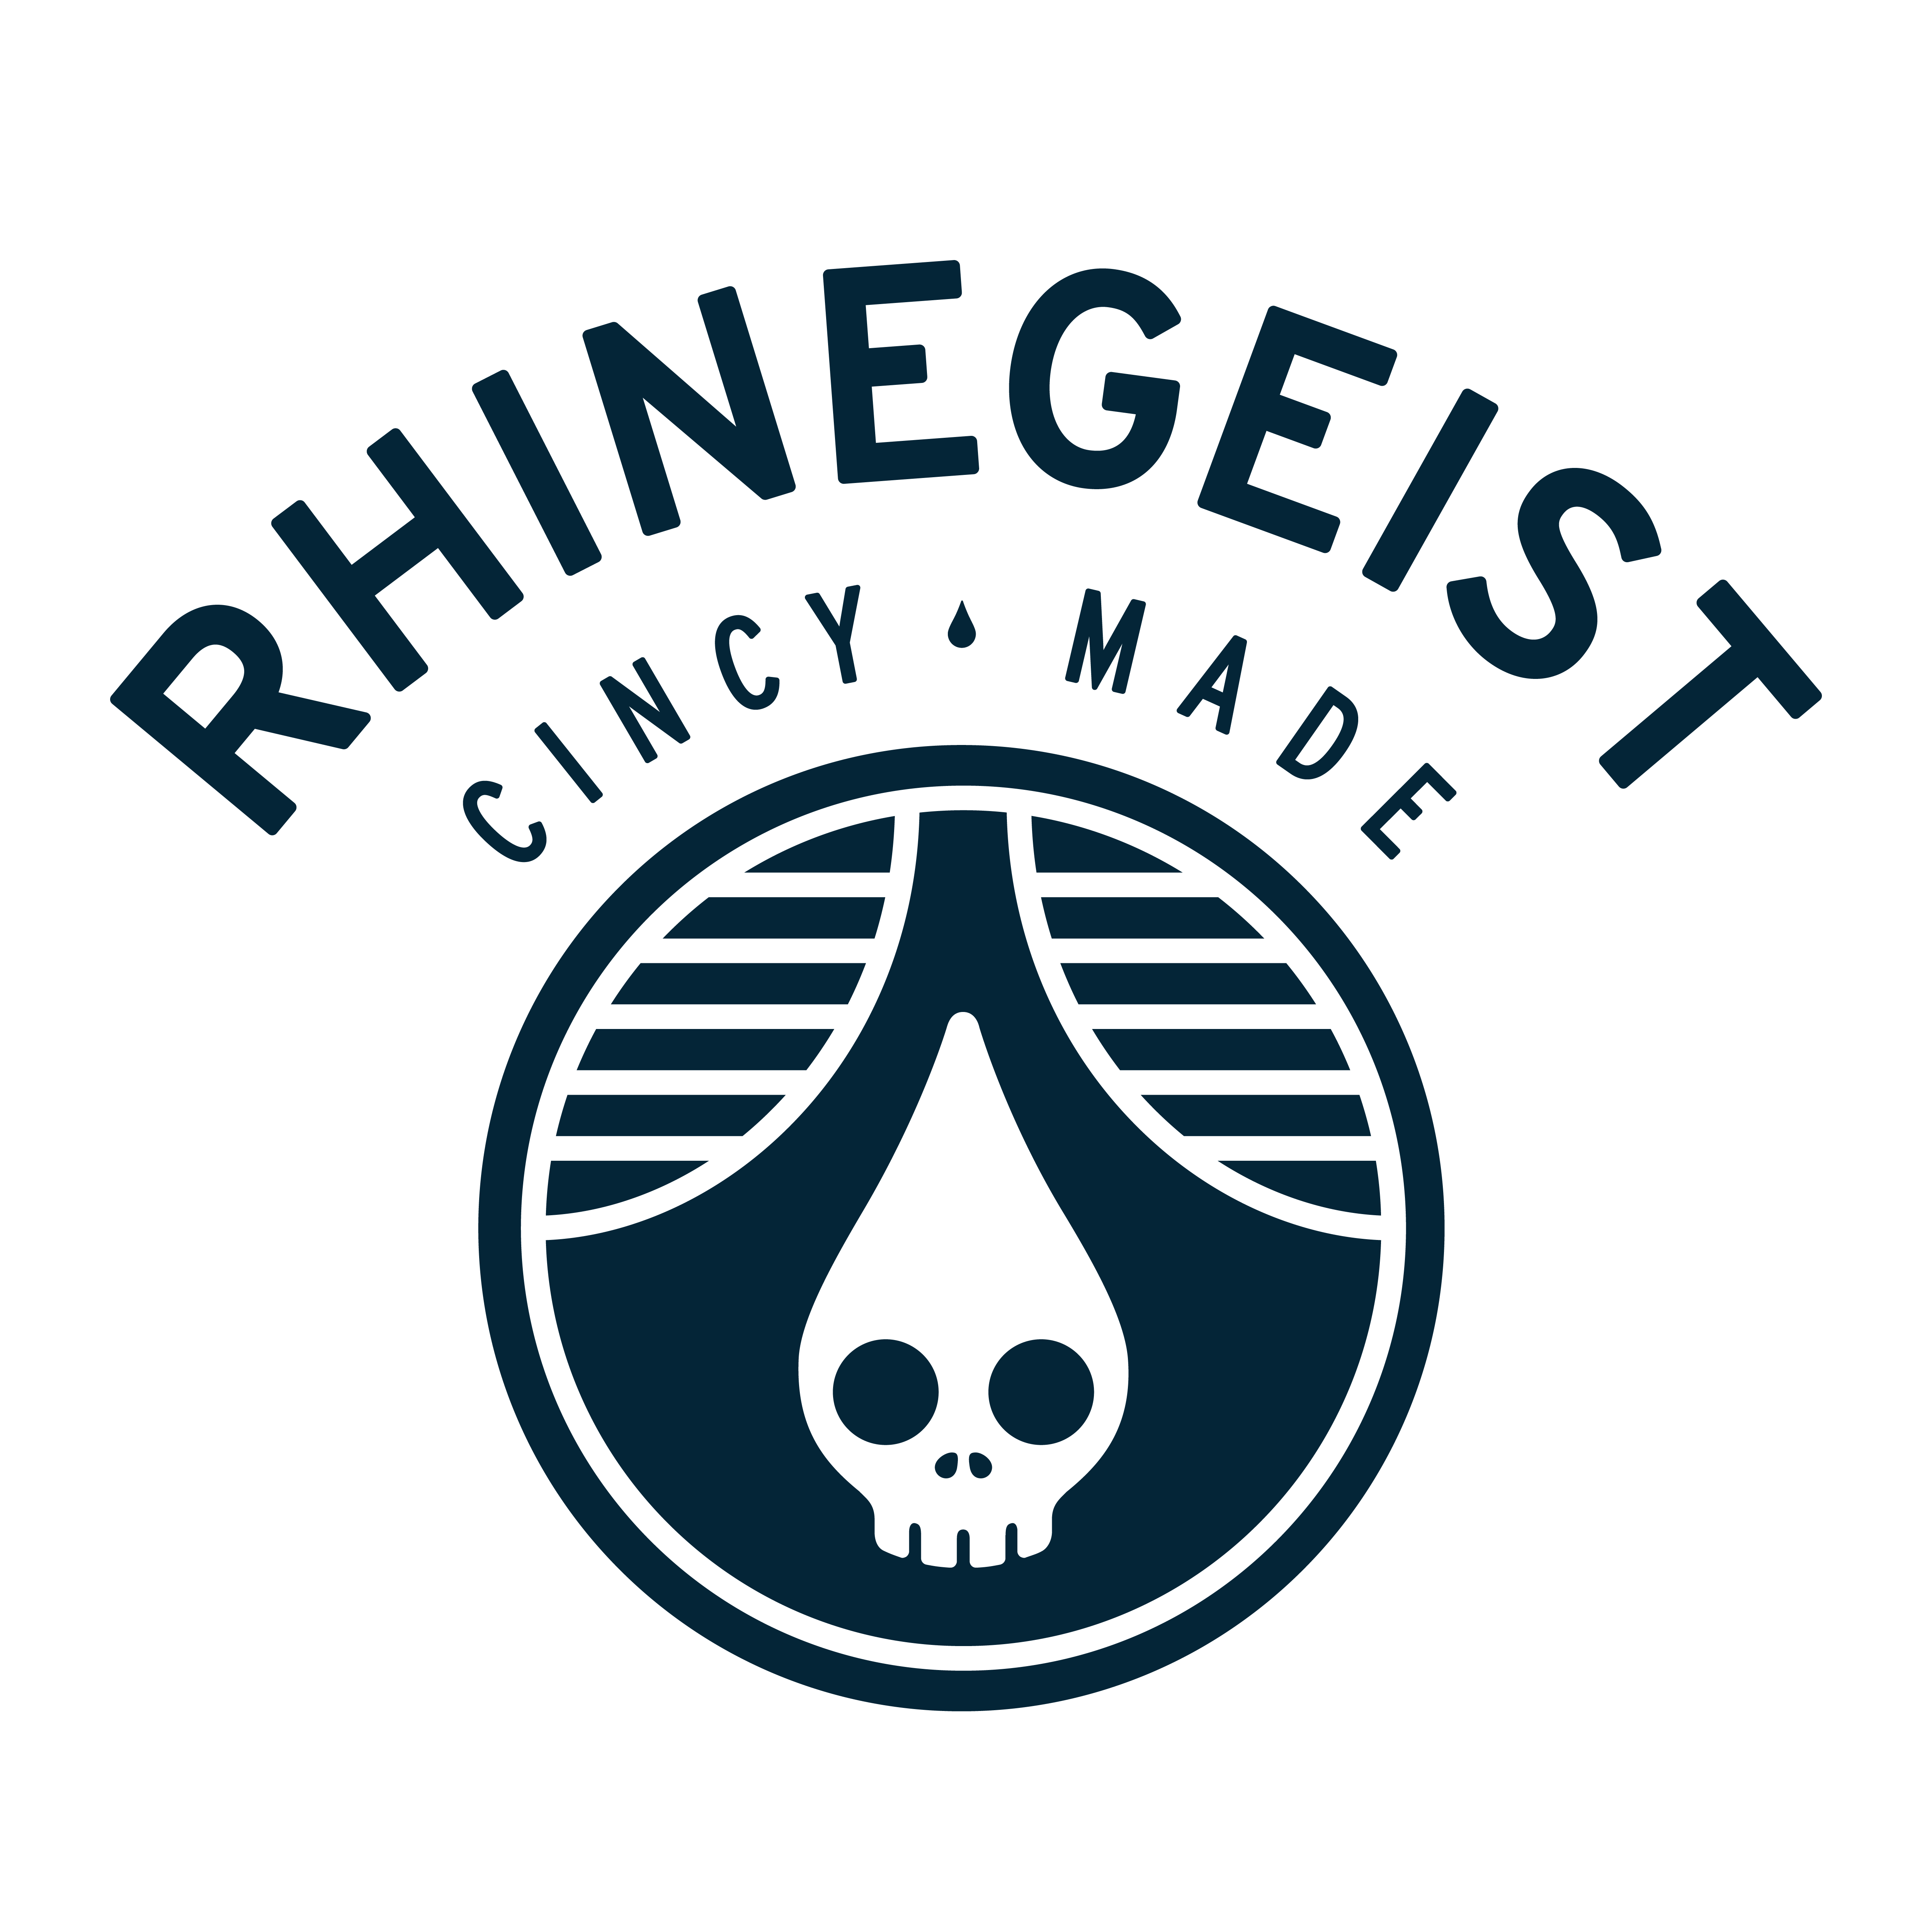 Rhinegeist logo